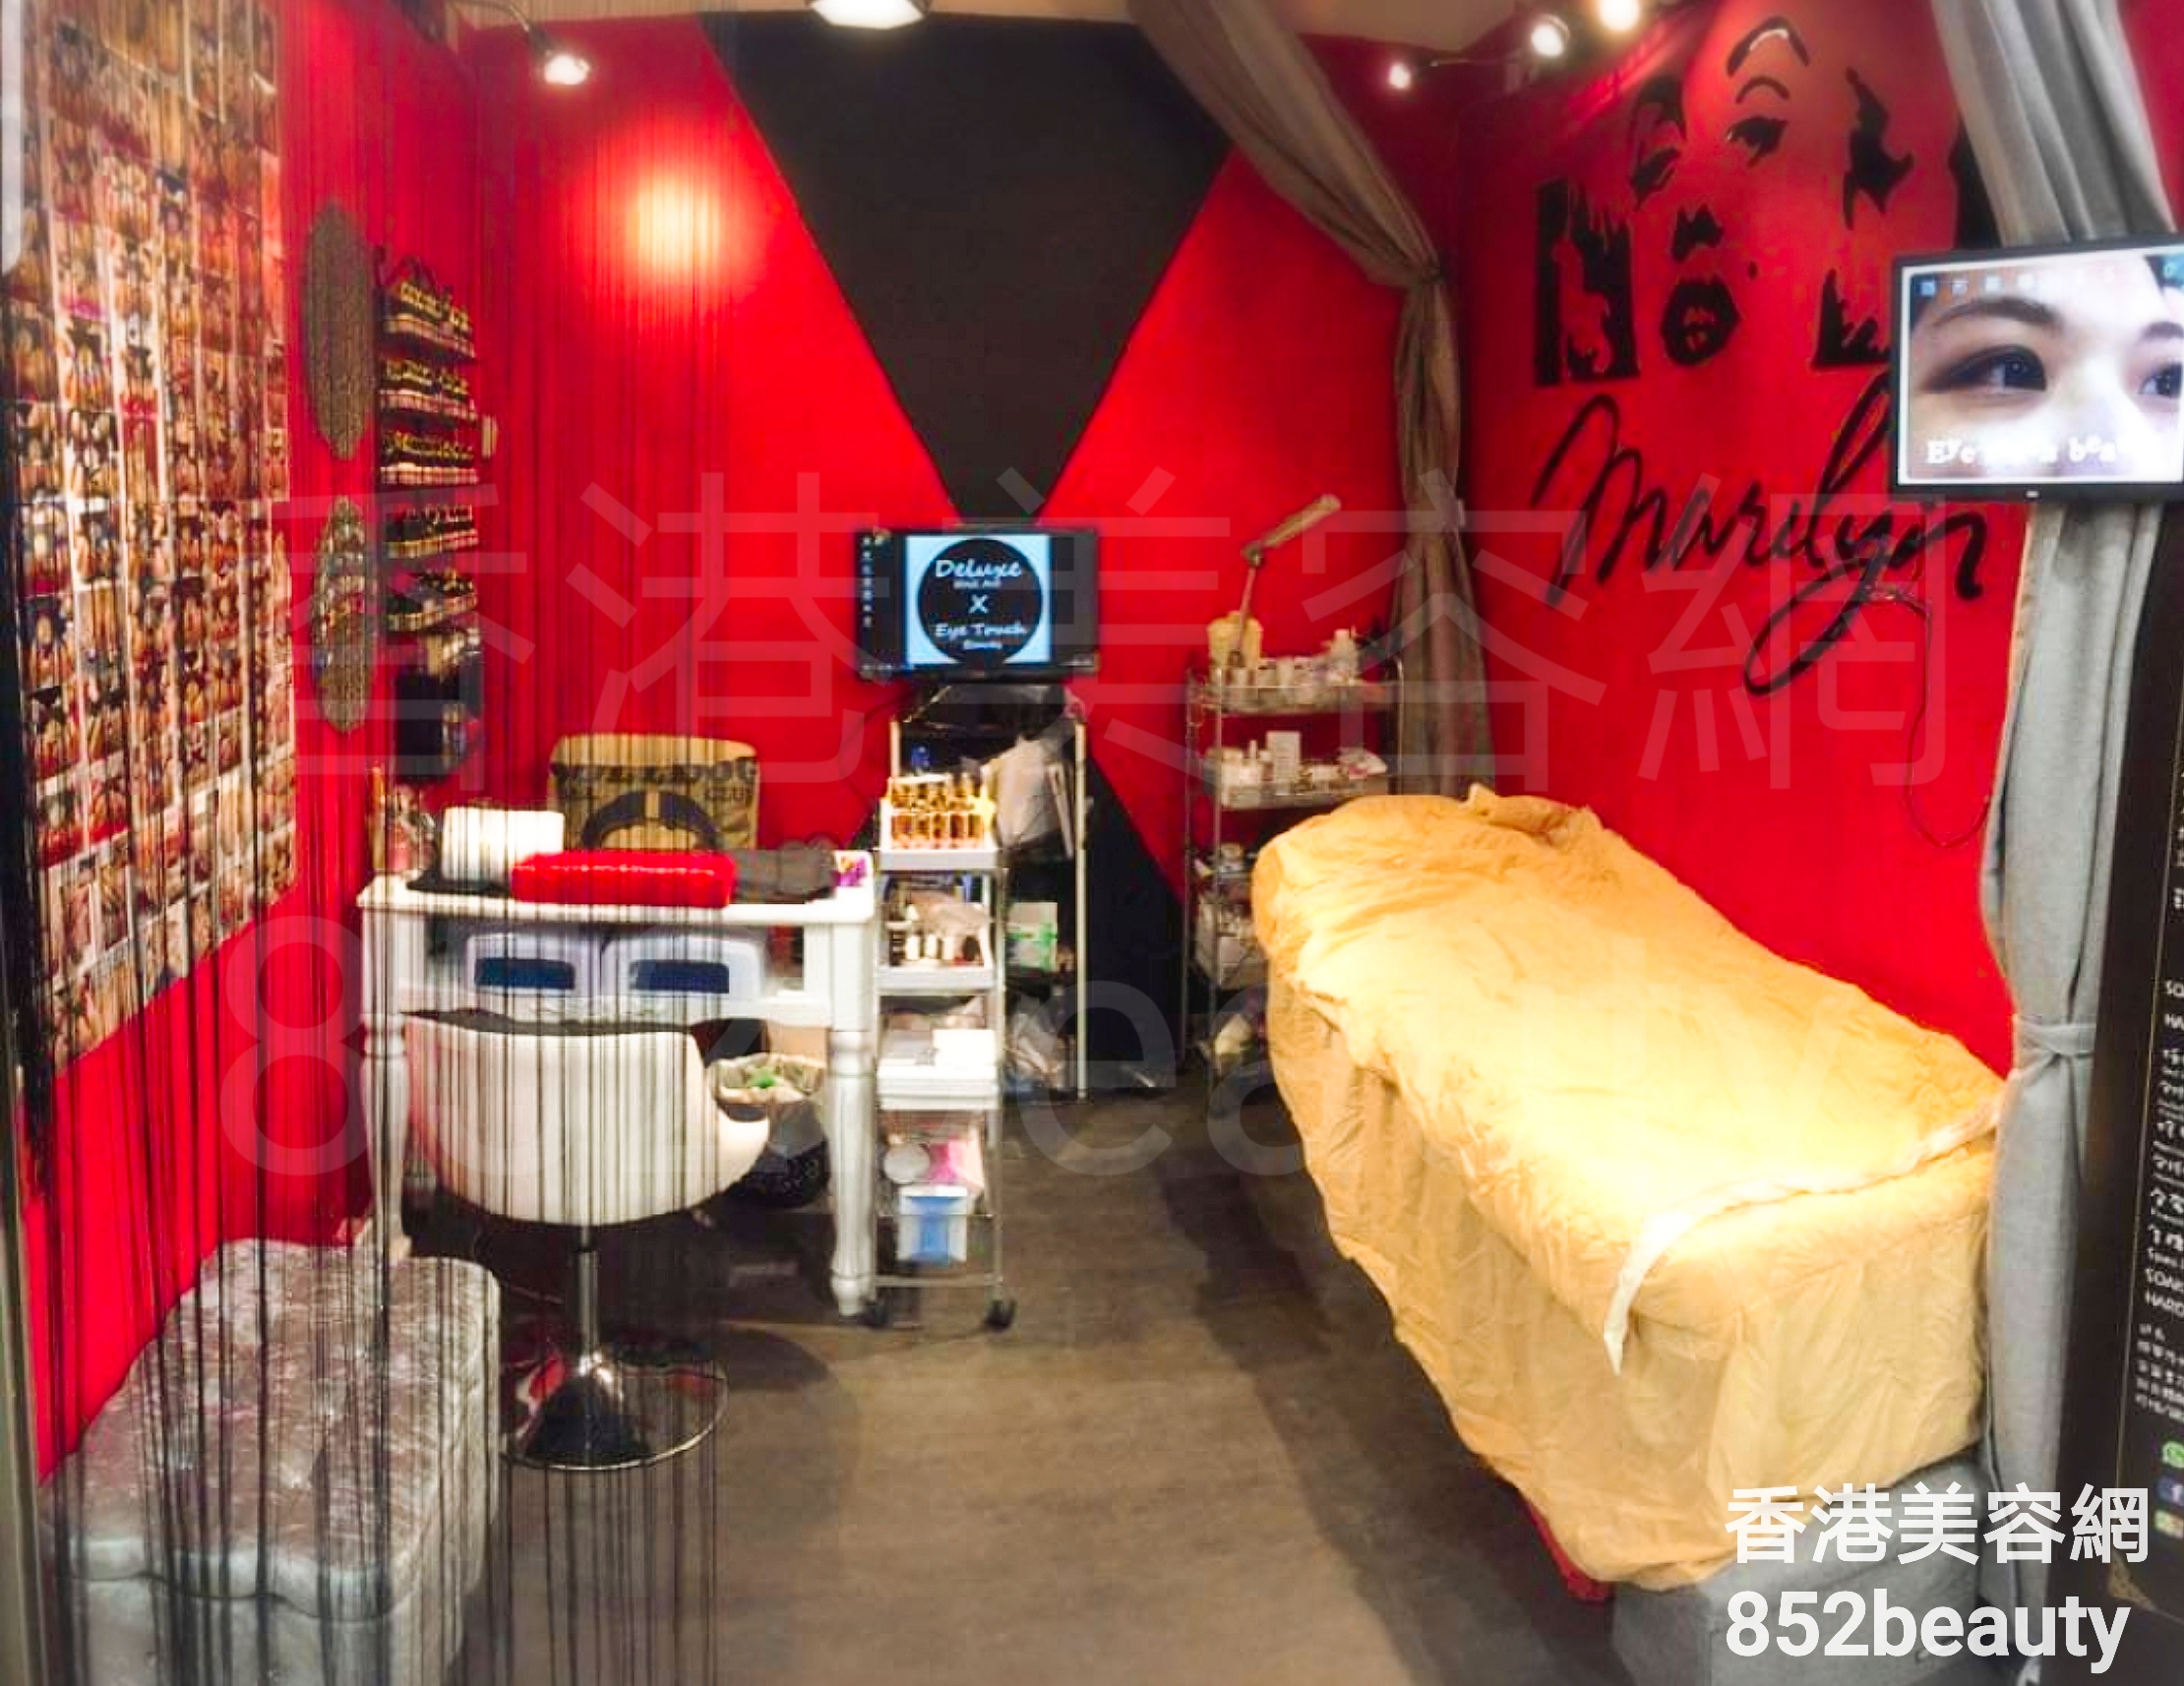 香港美容網 Hong Kong Beauty Salon 美容院 / 美容師: Deluxe Nail Art